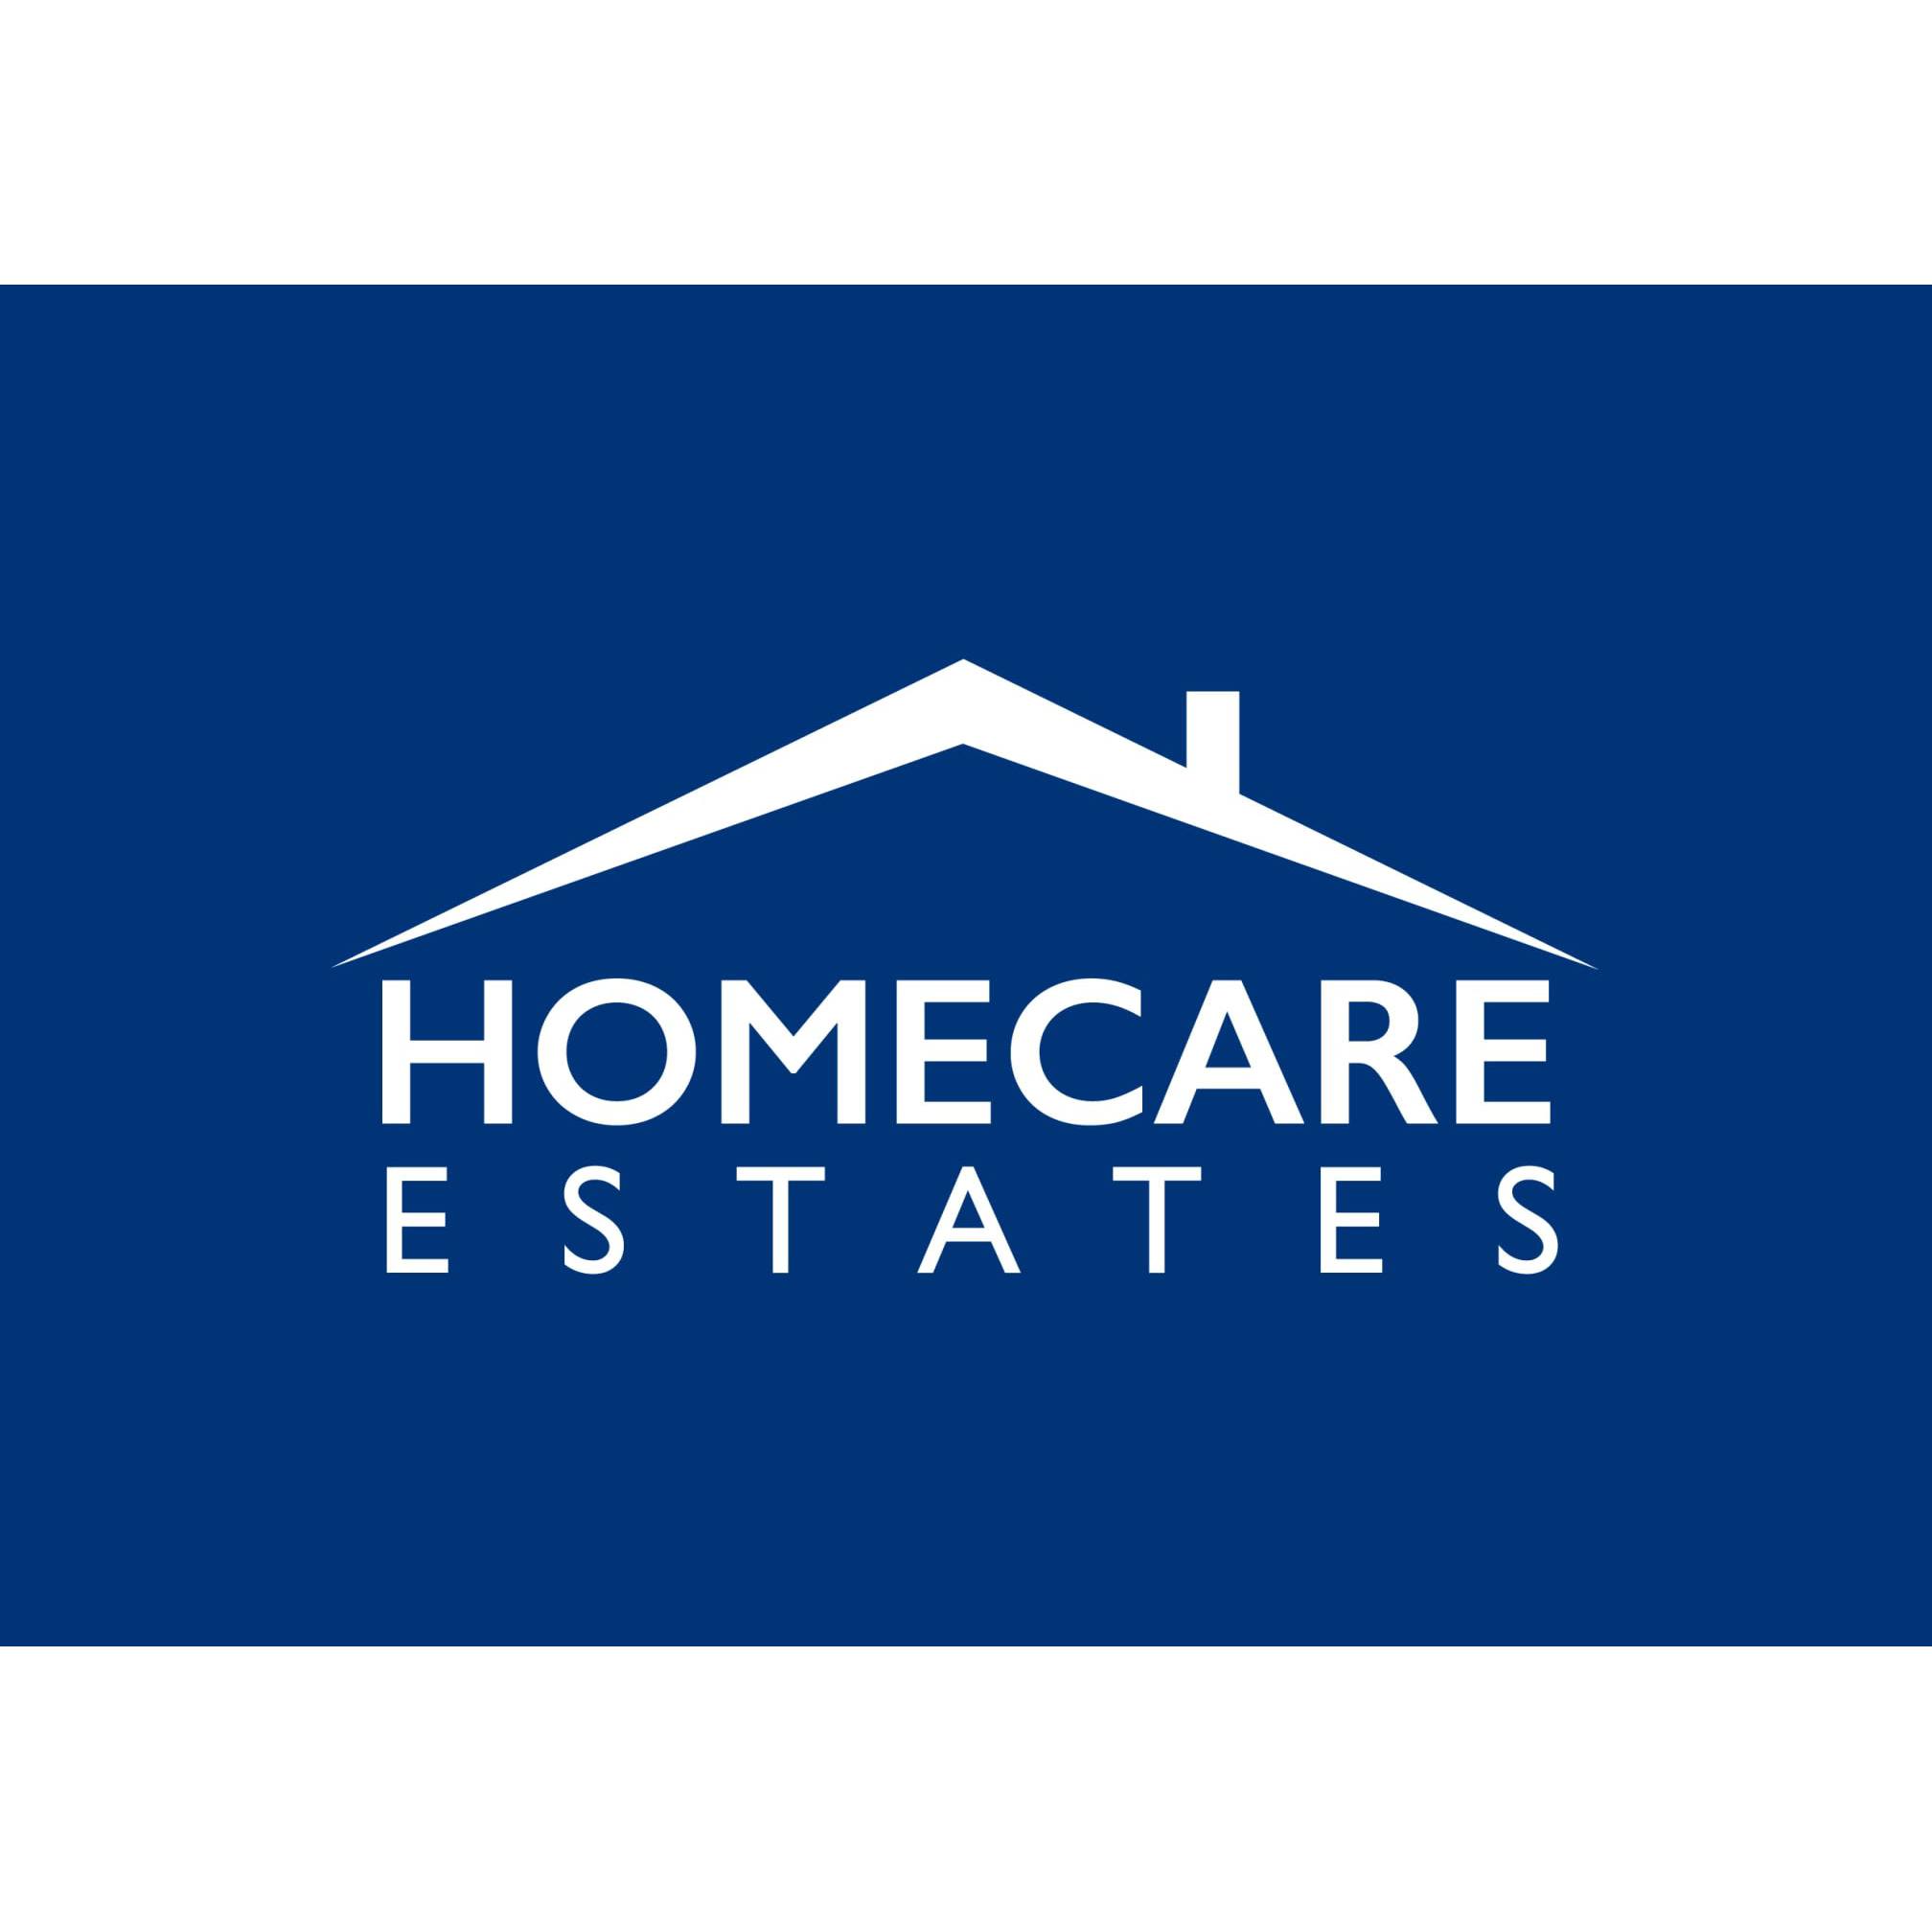 Homecare Estates- Sales and Lettings Agent in Wallington - Wallington, London SM6 8QG - 020 8395 8111 | ShowMeLocal.com